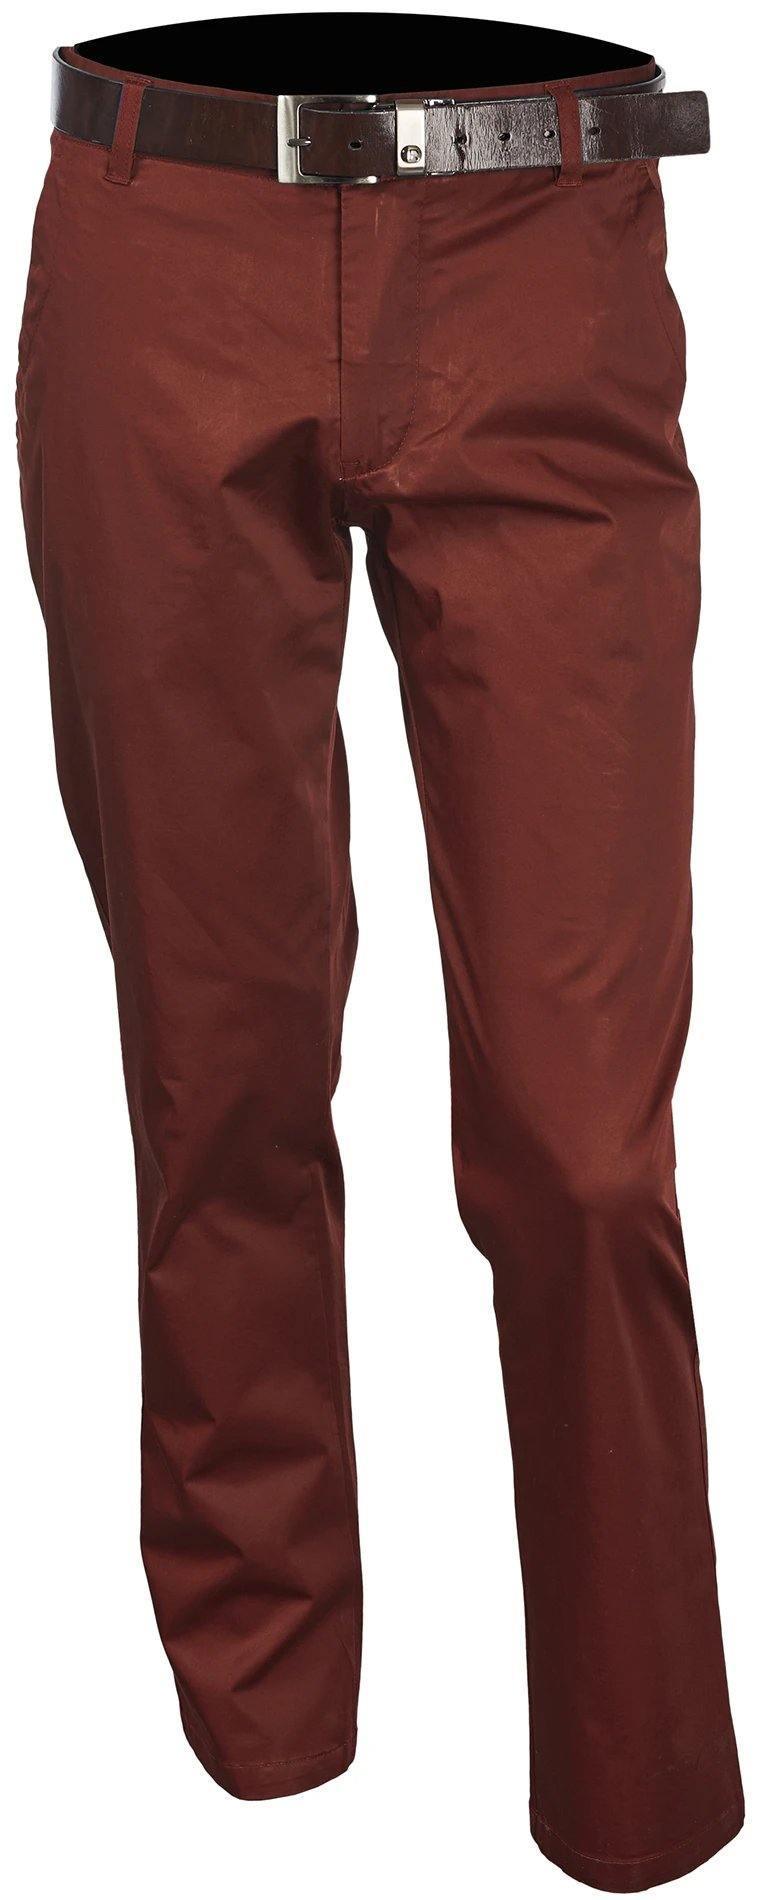 Men's Chino Casual Pants color Burgundy - Upscale Men's Fashion